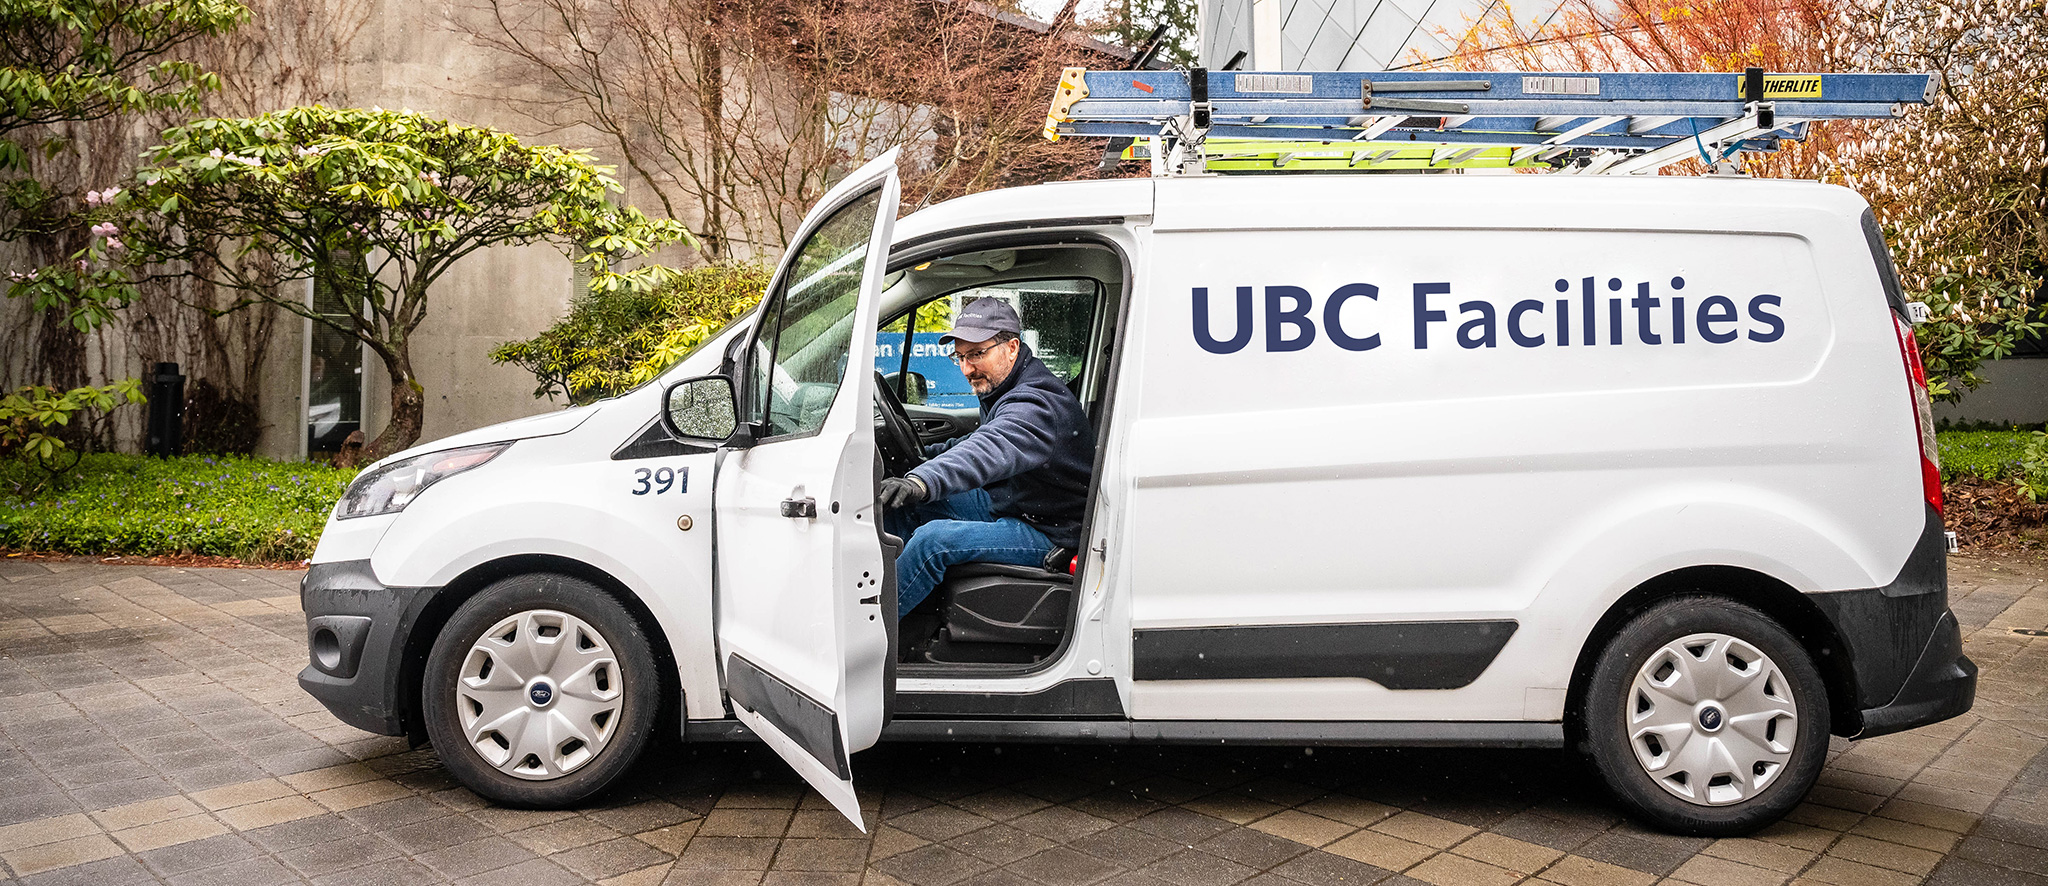 Jeff Georgilas, Utility Worker sitting in a white UBC van